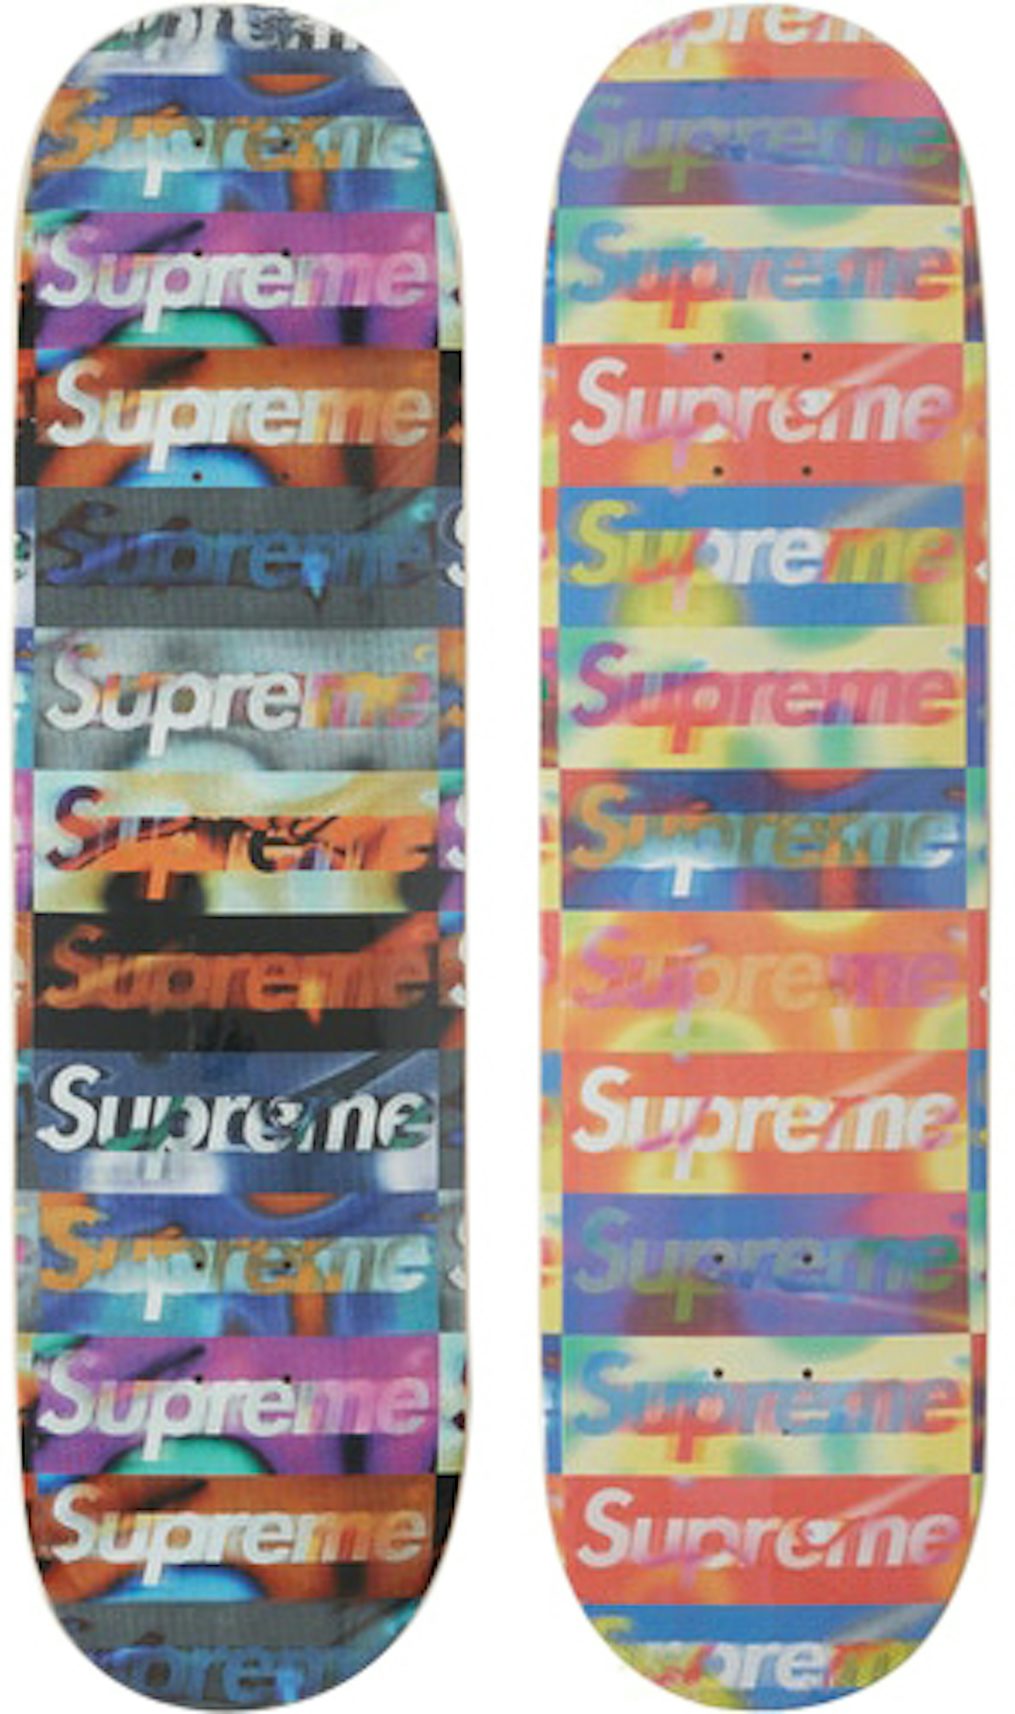 Supreme's unauthorized Louis Vuitton skate decks from 2000